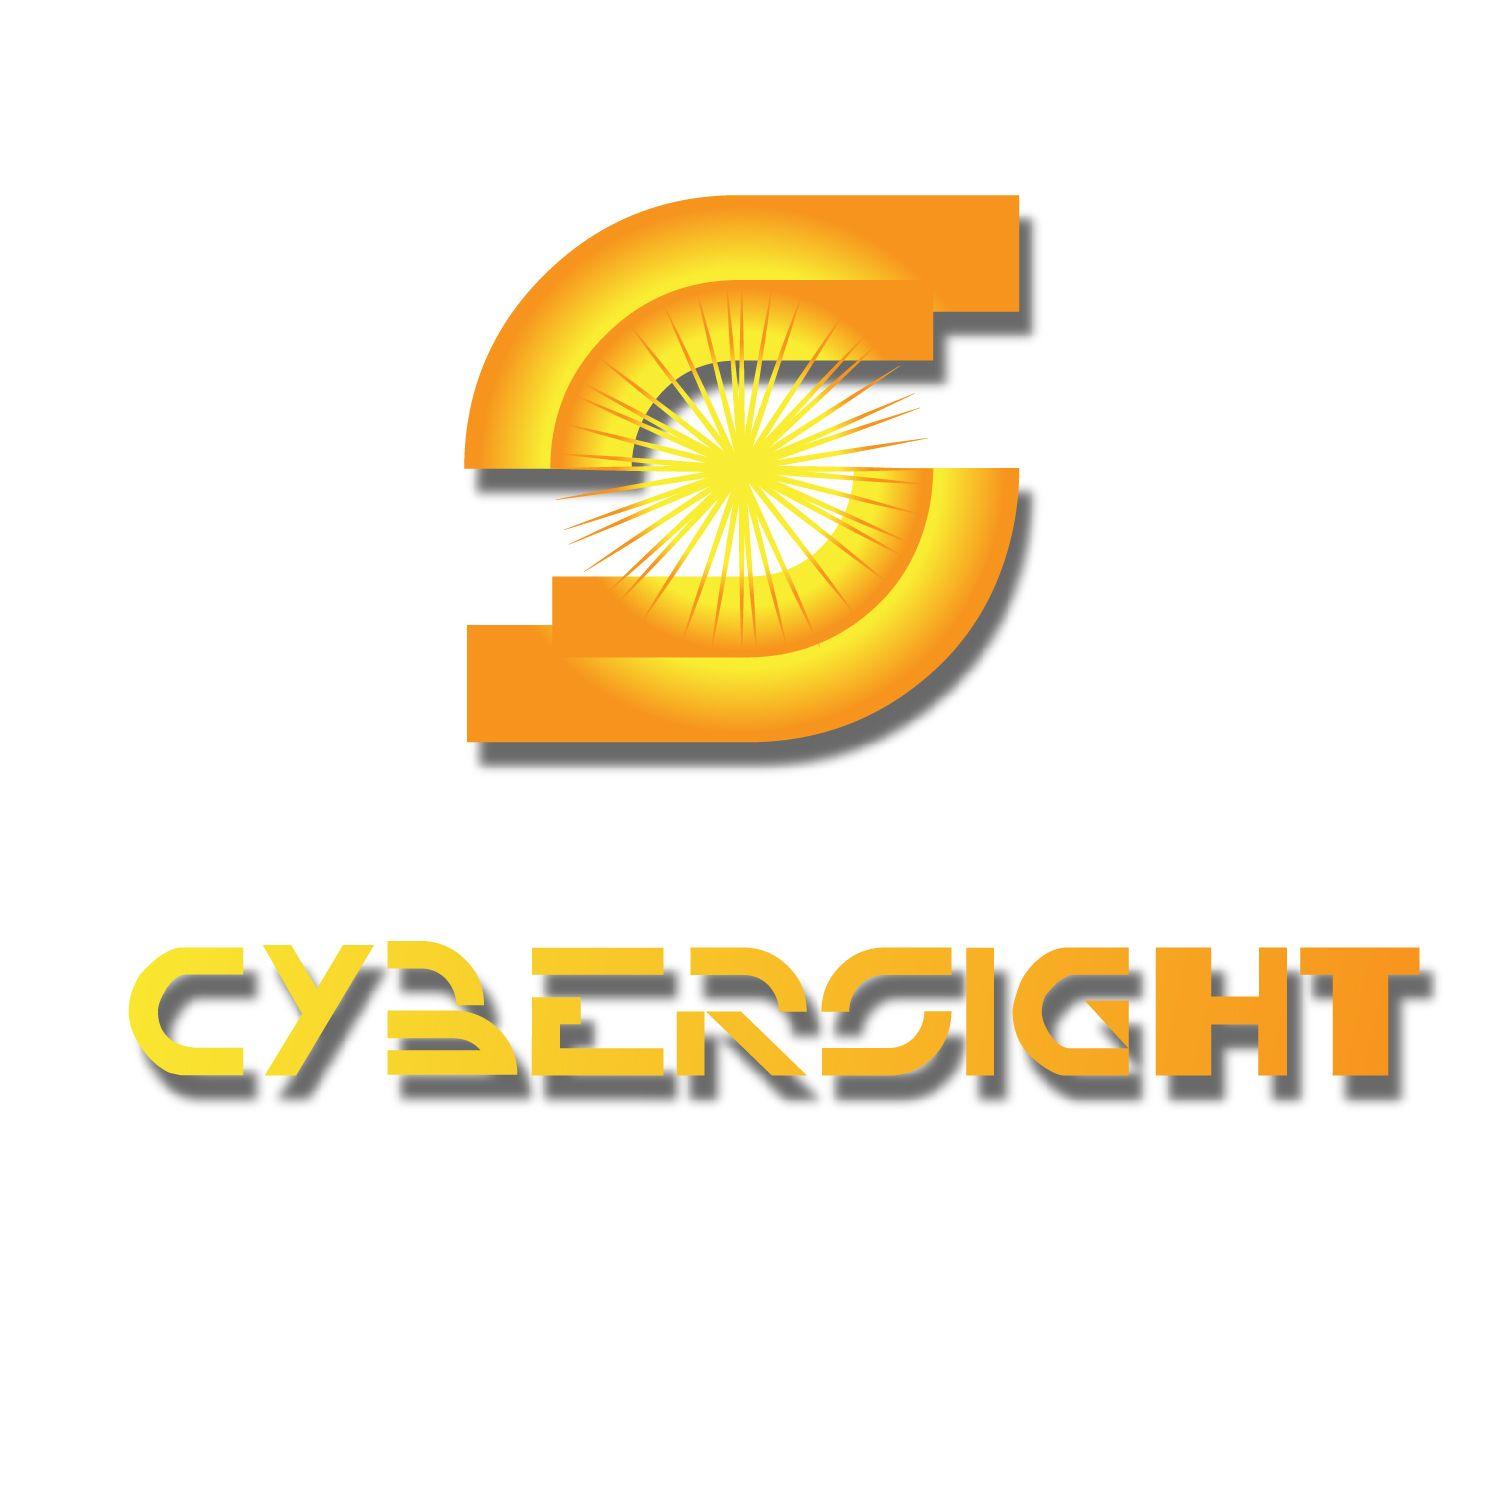 Yellow Software Logo - Serious, Modern, Software Logo Design For Cybersight By Saint Chris